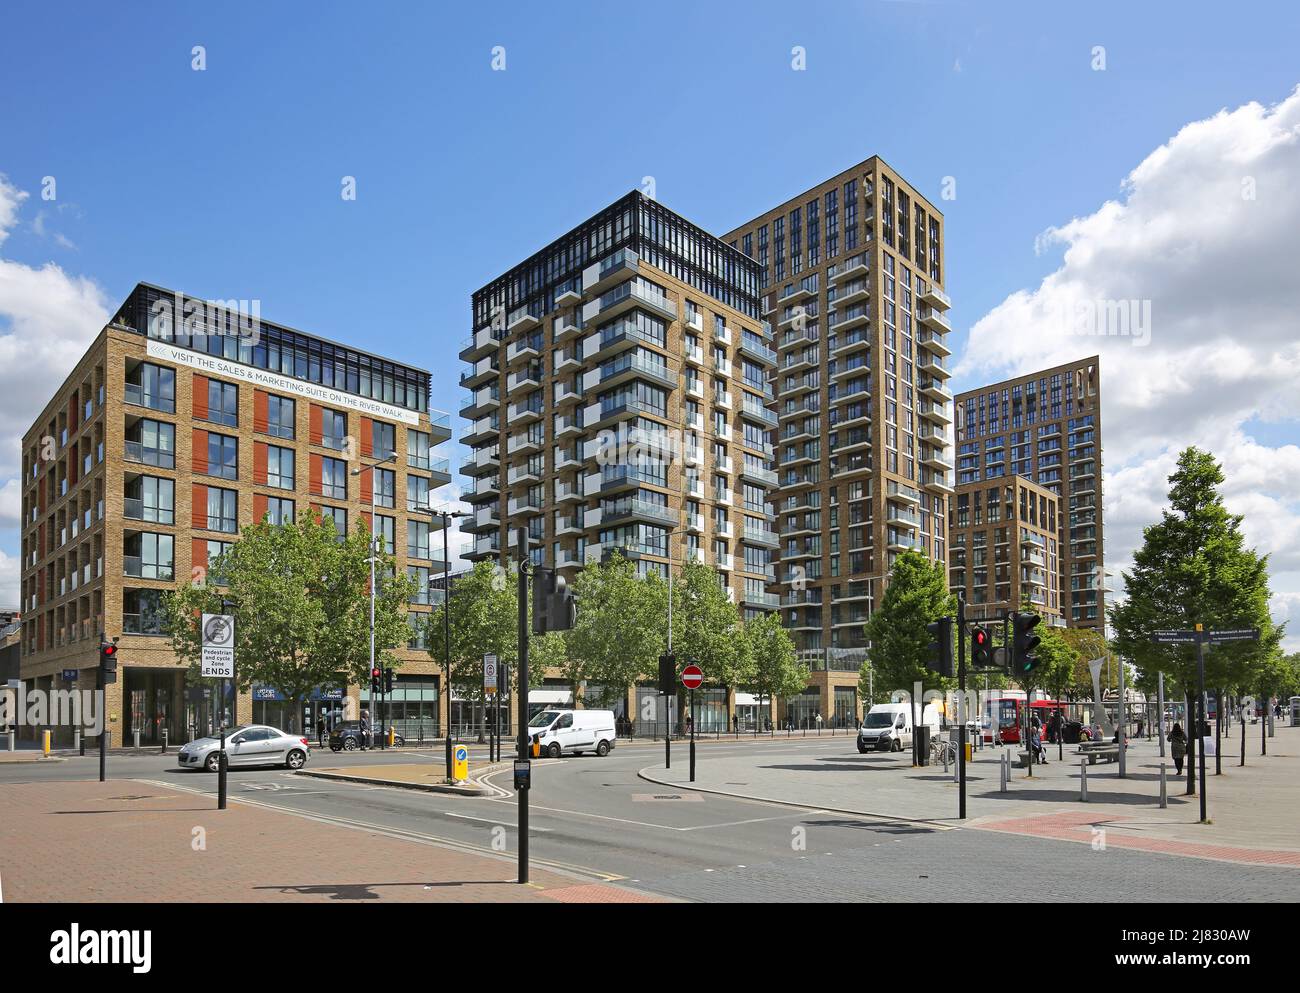 New residential development on Beresford Street, Woolwich, London, UK. Built around the new Elizabeth Line (Crossrail) station. Stock Photo